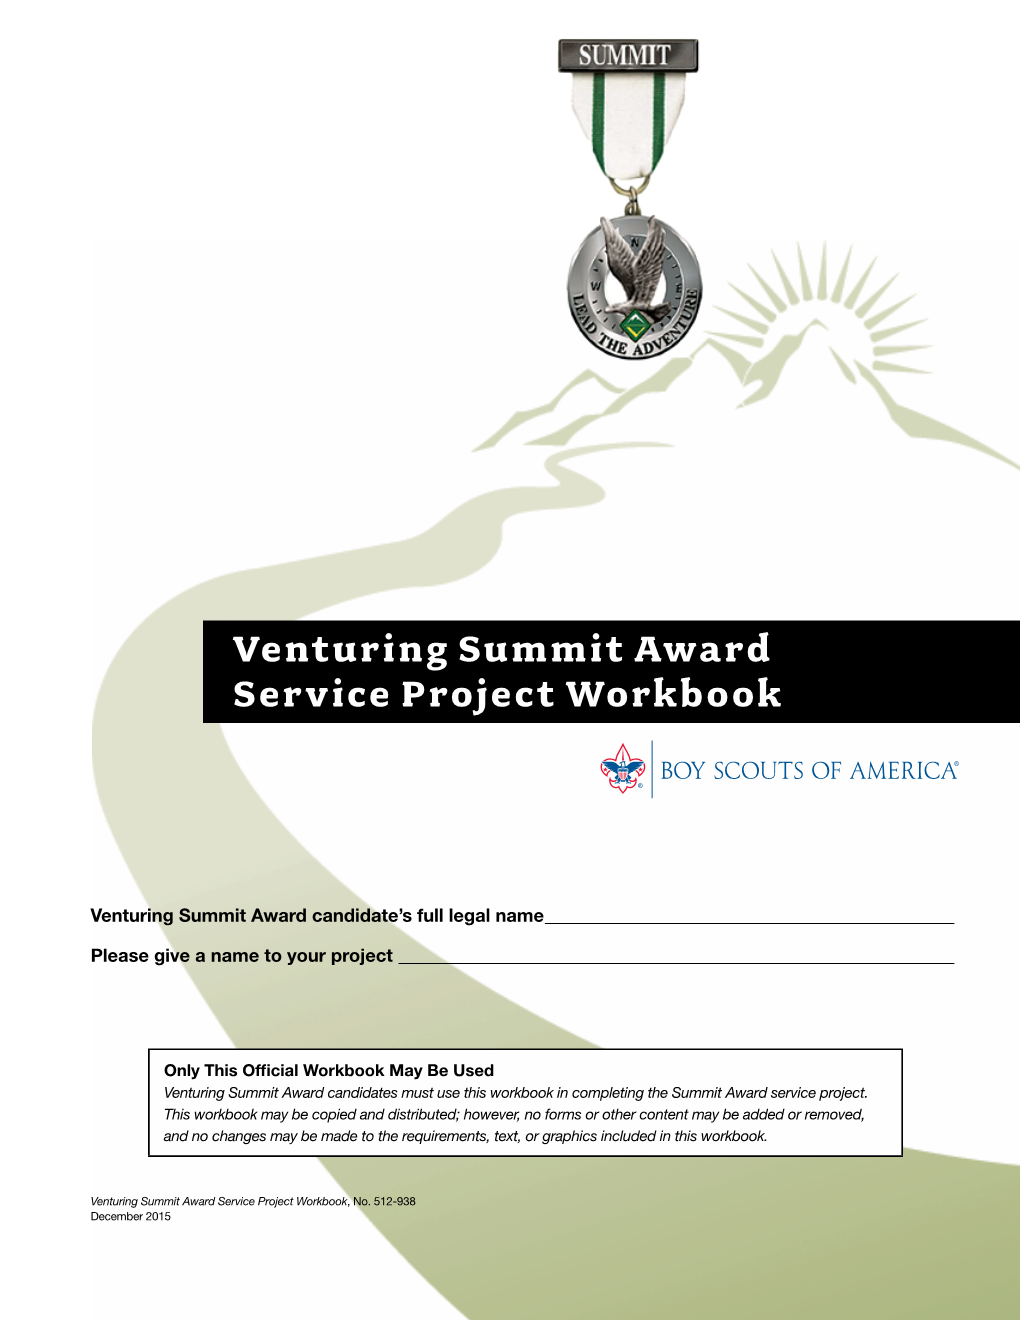 Venturing Summit Award Service Project Workbook